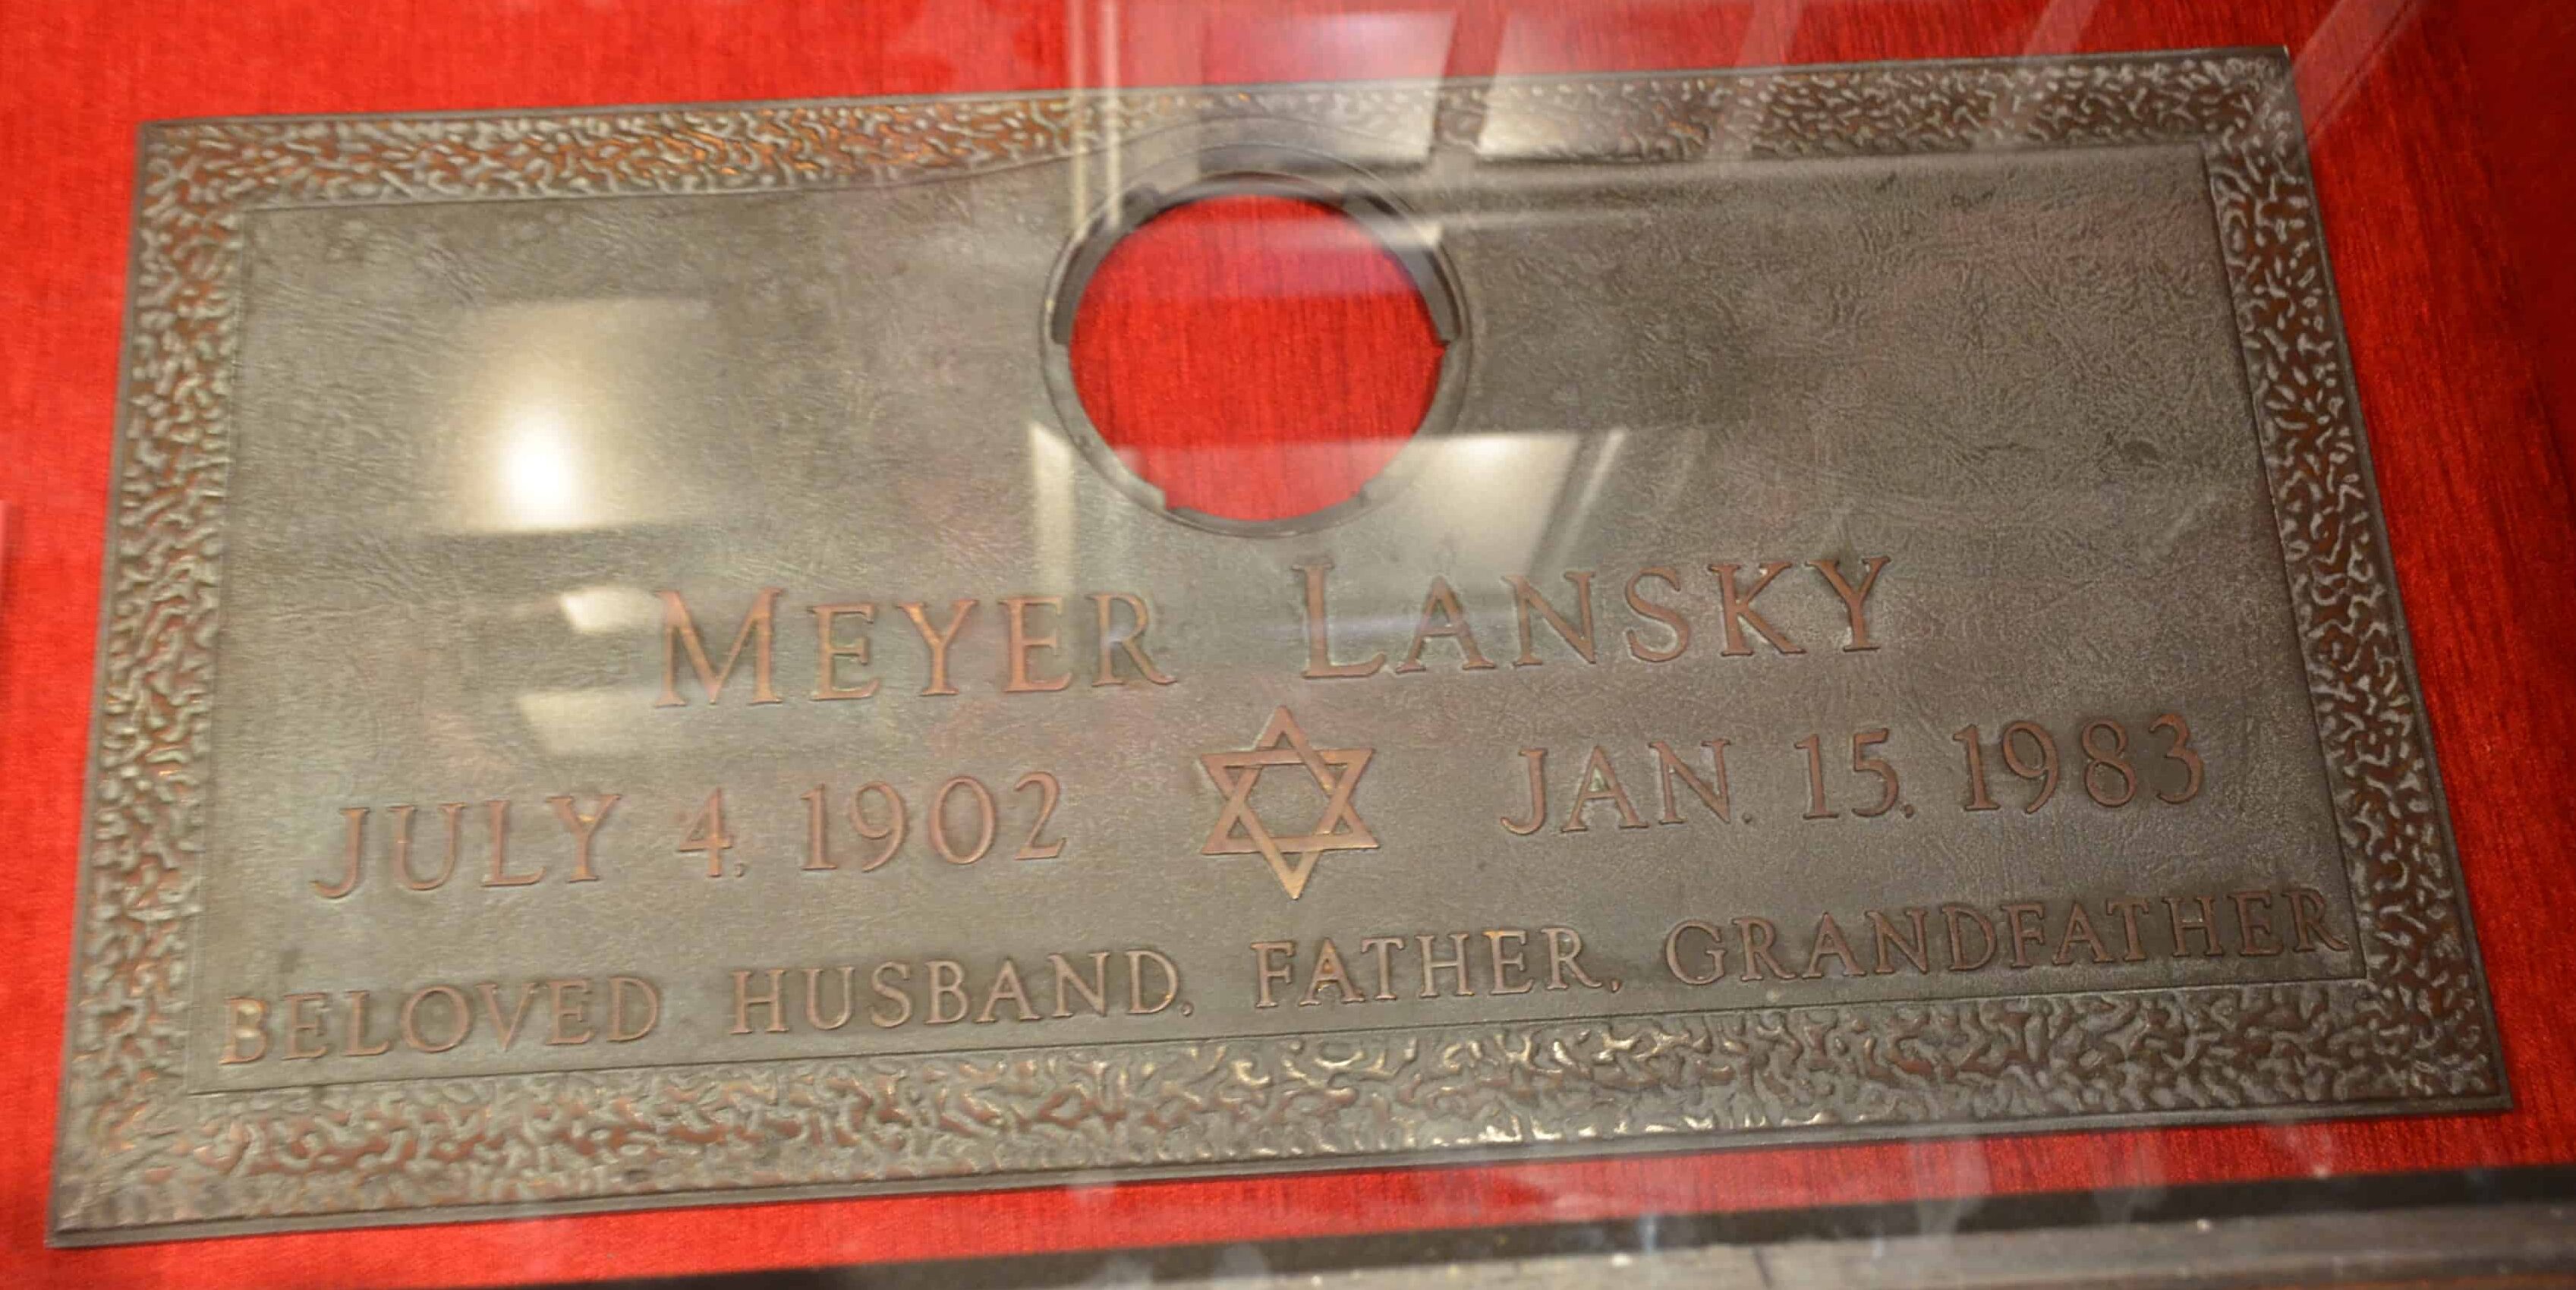 Meyer Lansky's gravestone at the Mob Museum in Las Vegas, Nevada